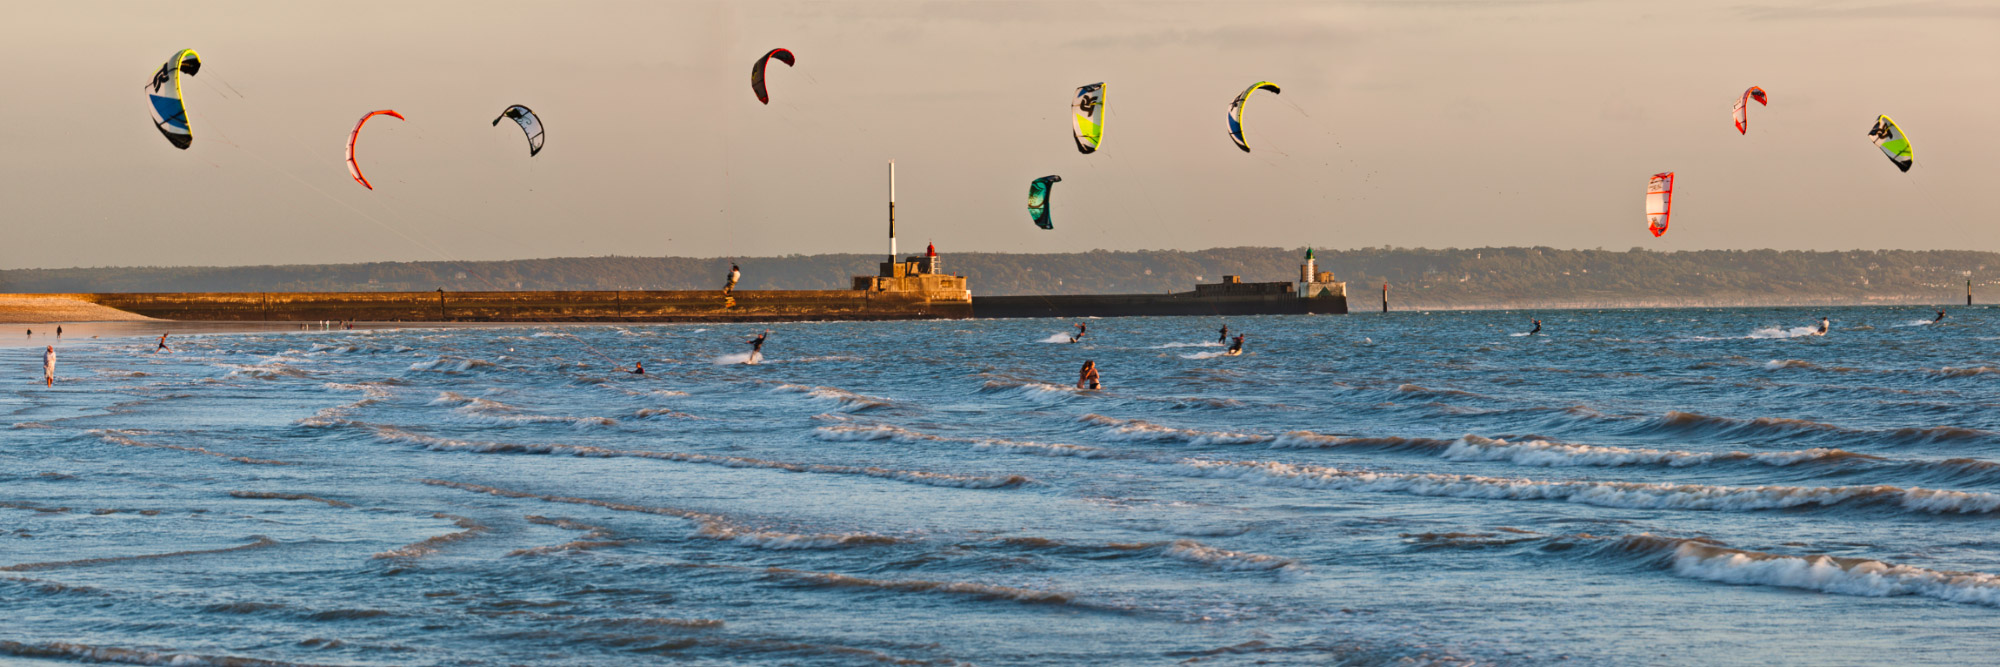 Kite Surf, Le Havre